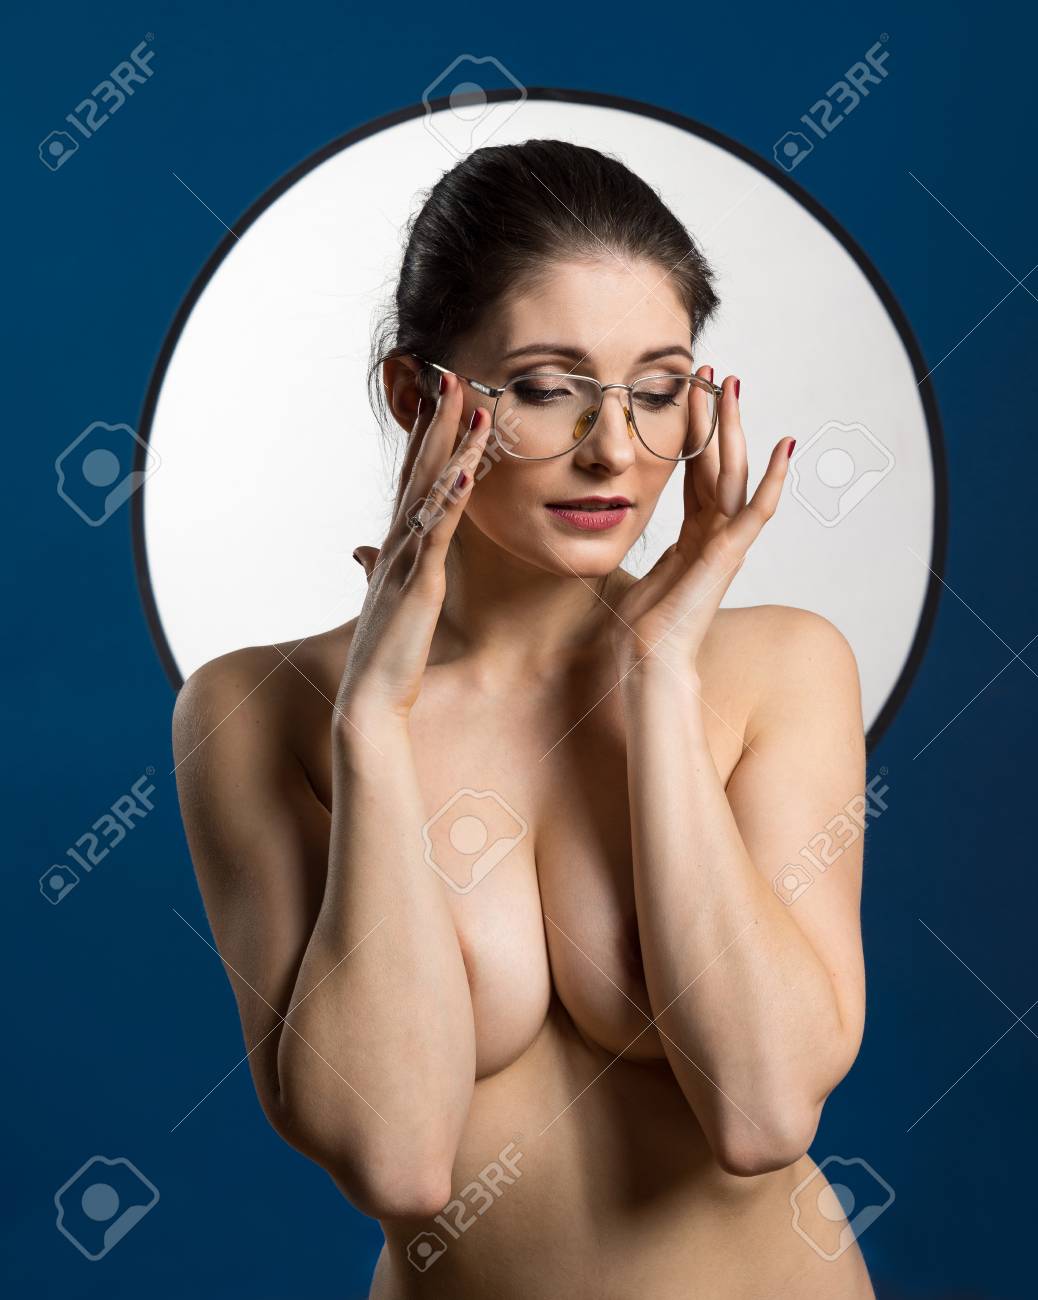 betty jean peterson add photo naked girls wearing glasses